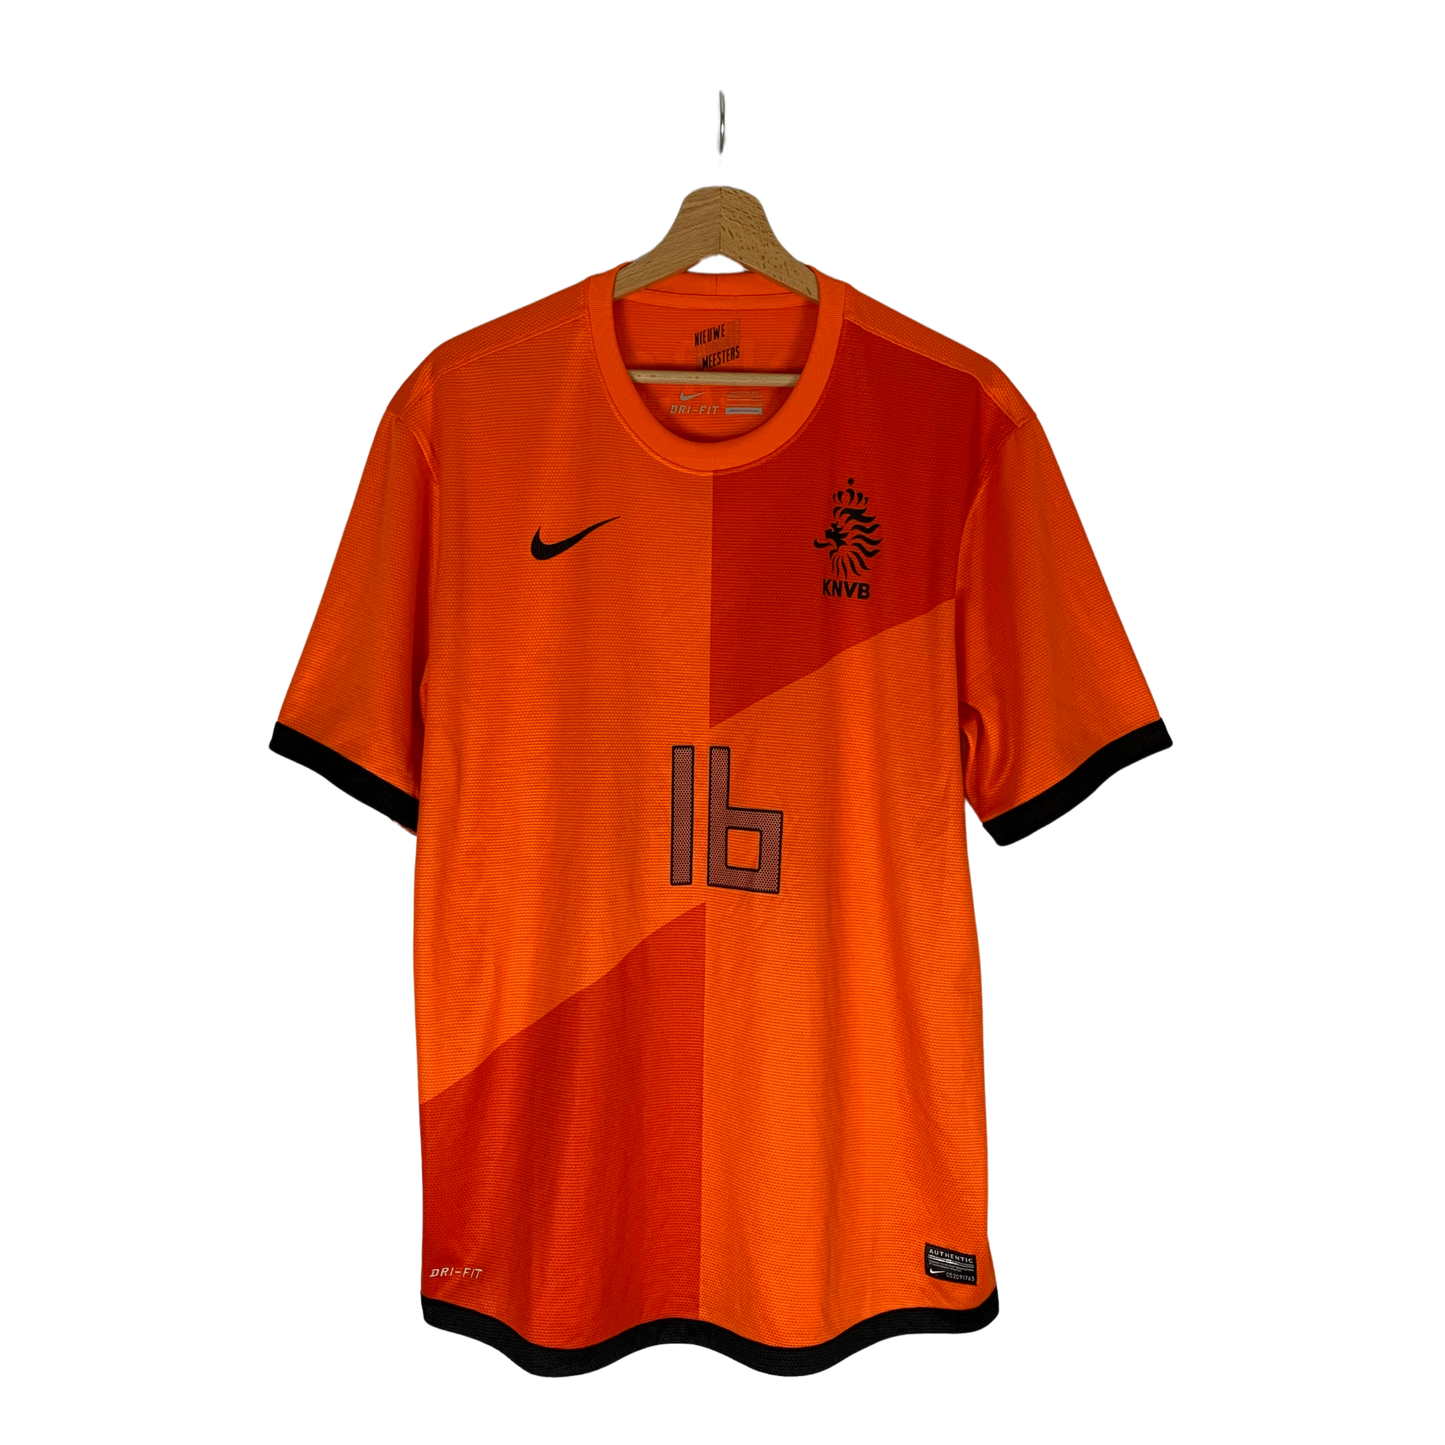 Classic Football Shirt The Netherlands season 2012 - Van Persie at InnoFoot